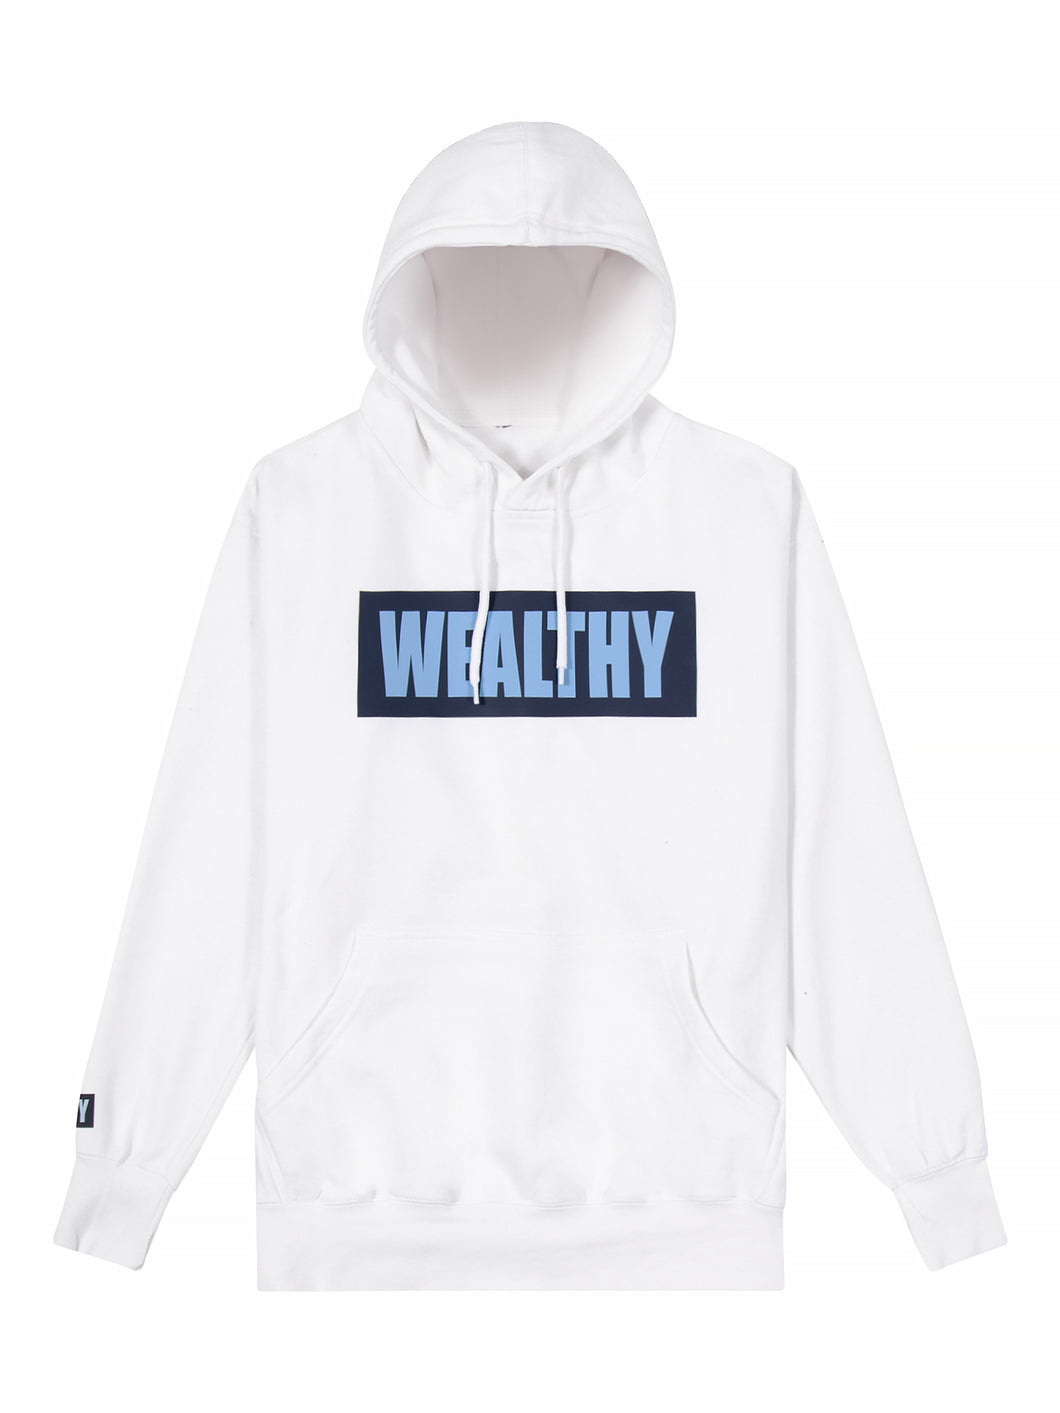 Wealthy Hoodie (White/Navy/Baby Blue)